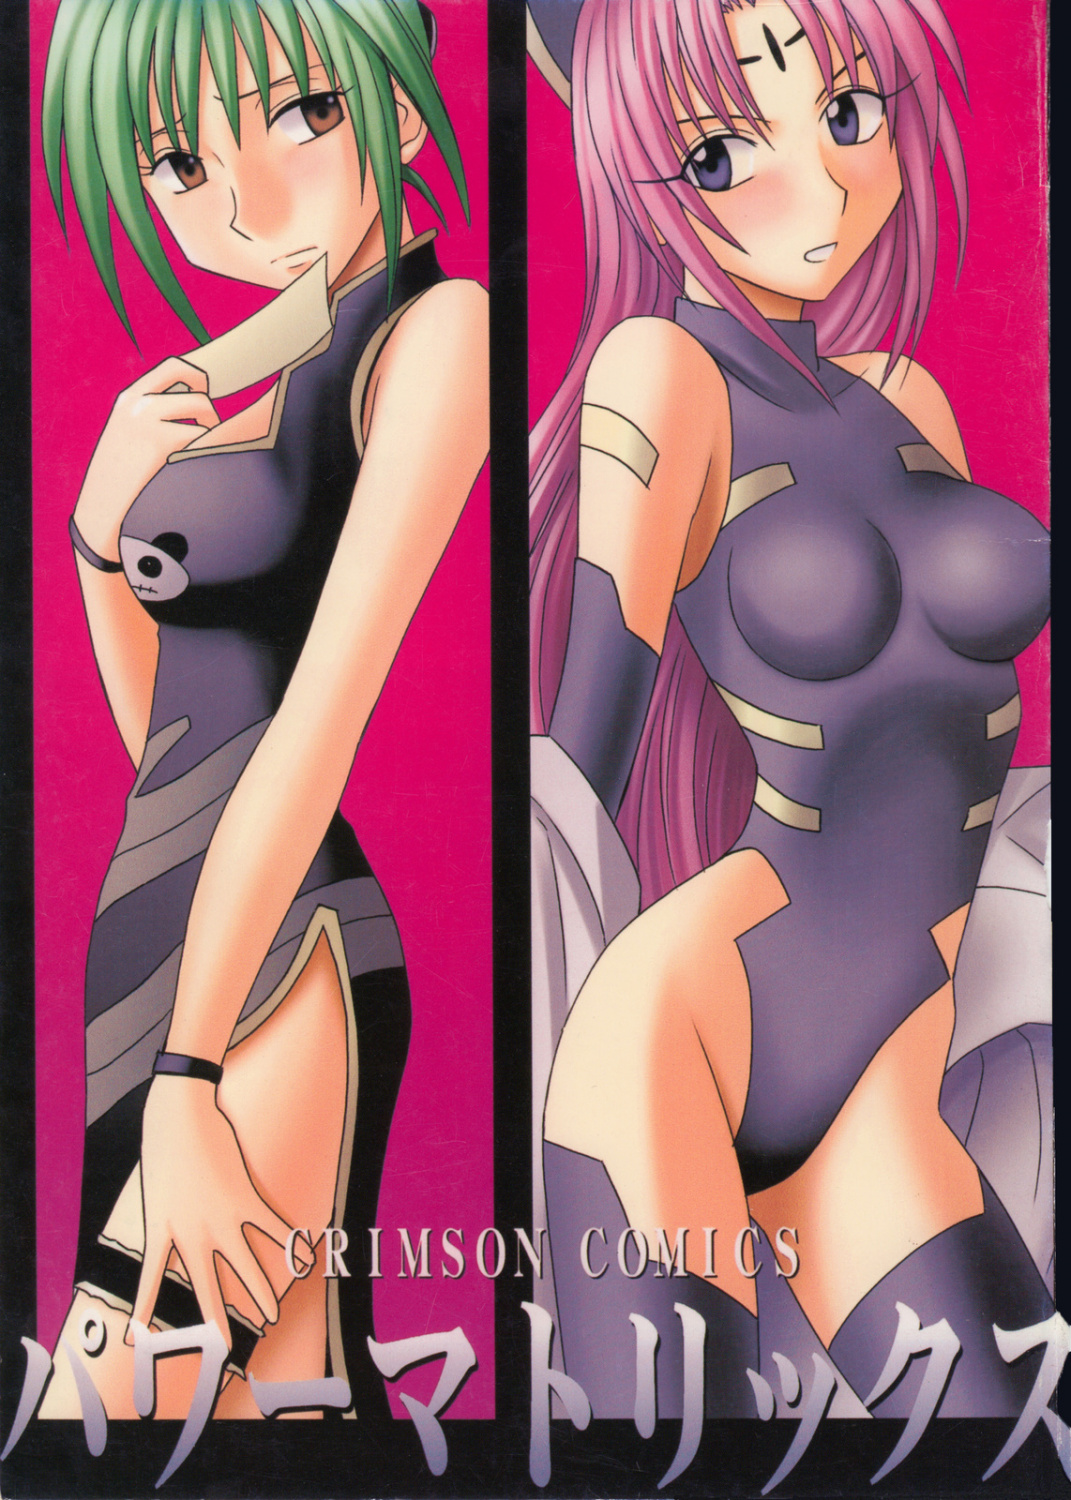 1071px x 1500px - Power Matrix - Multporn Comics & Hentai manga